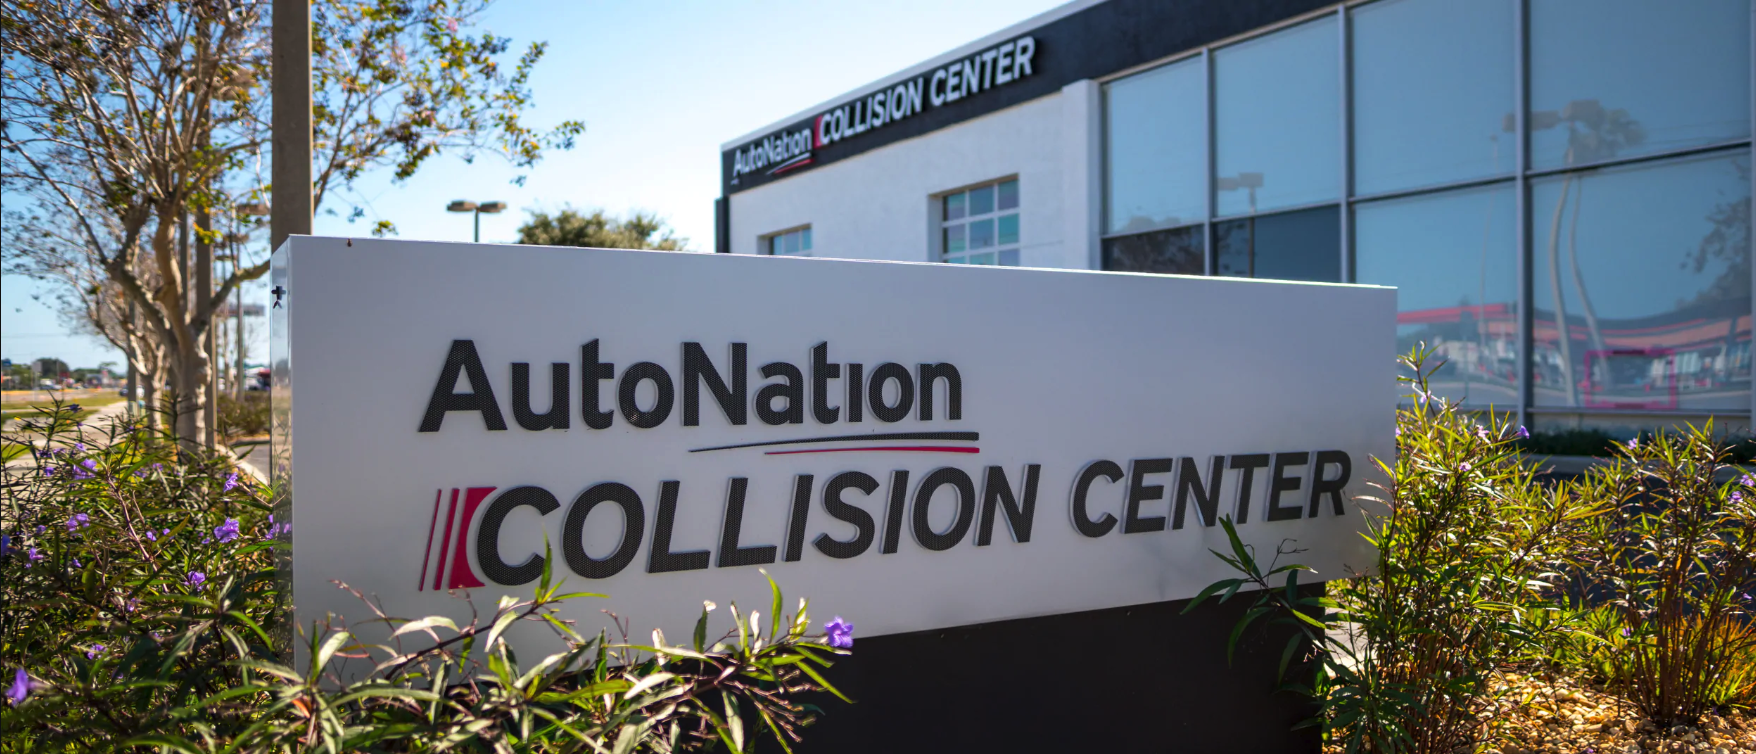 AutoNation Chevrolet North Collision Center